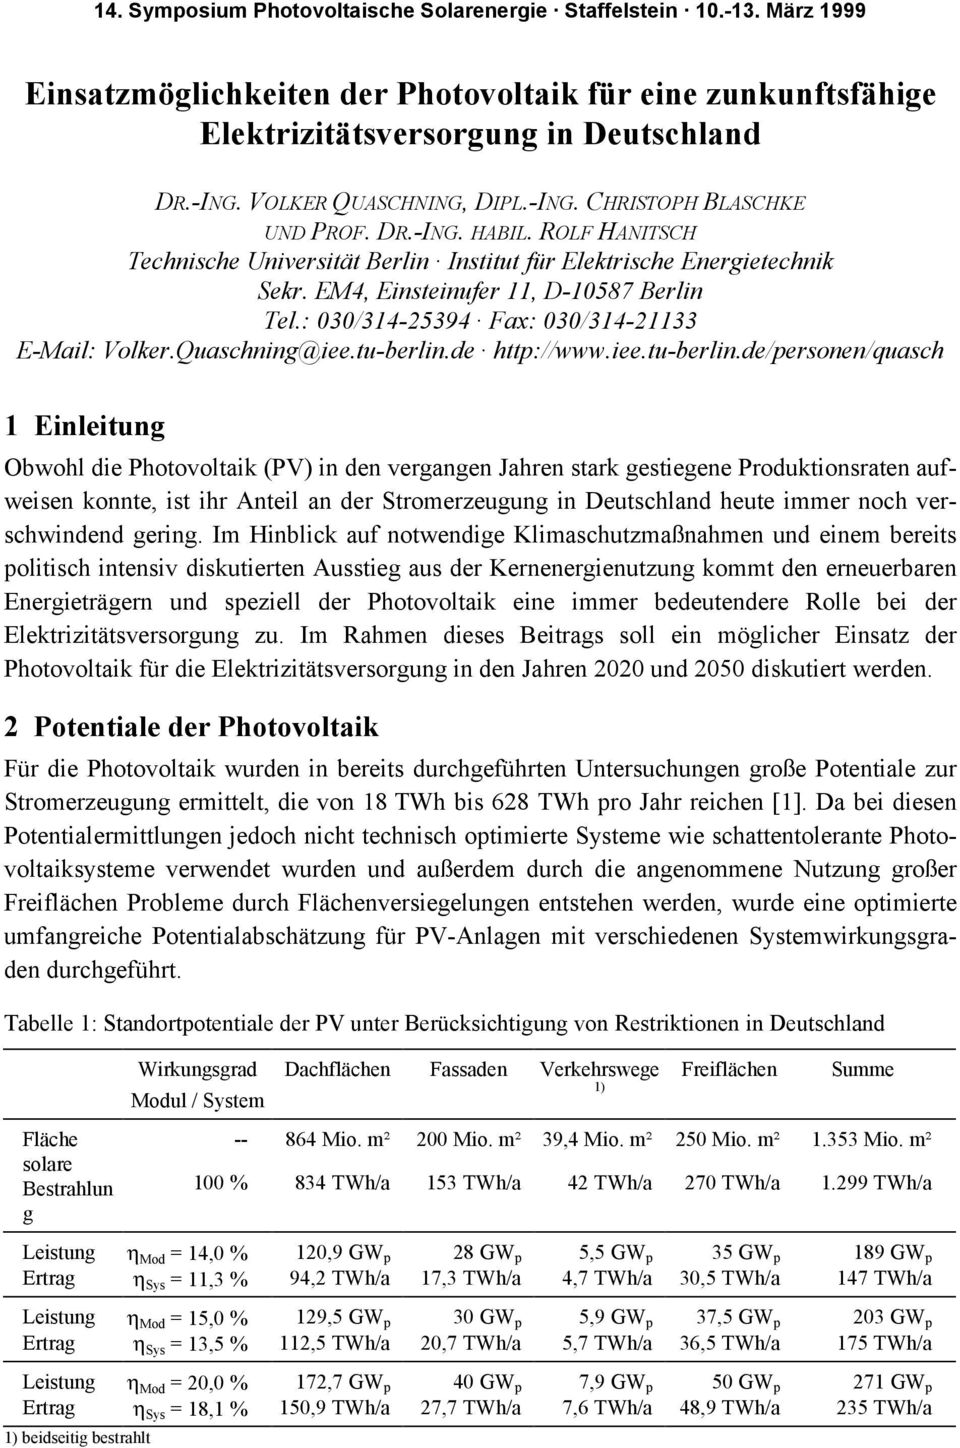 EM4, Einsteinufer 11, D-1587 Berlin Tel.: 3/314-25394 Fax: 3/314-21133 E-Mail: Volker.Quaschning@iee.tu-berlin.